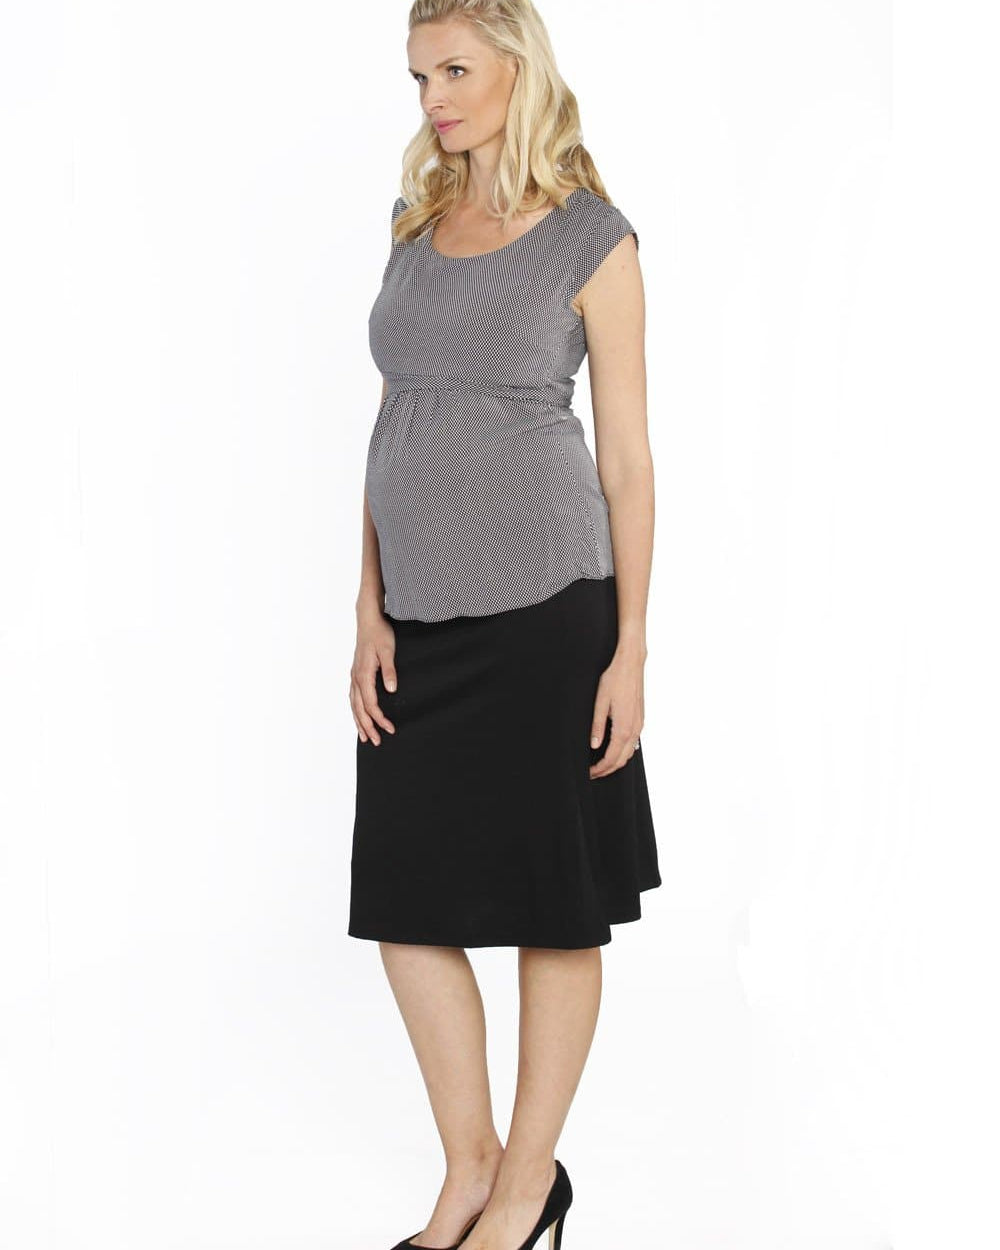 Maternity Soft Stretchy Skirt in Black (10152229446)